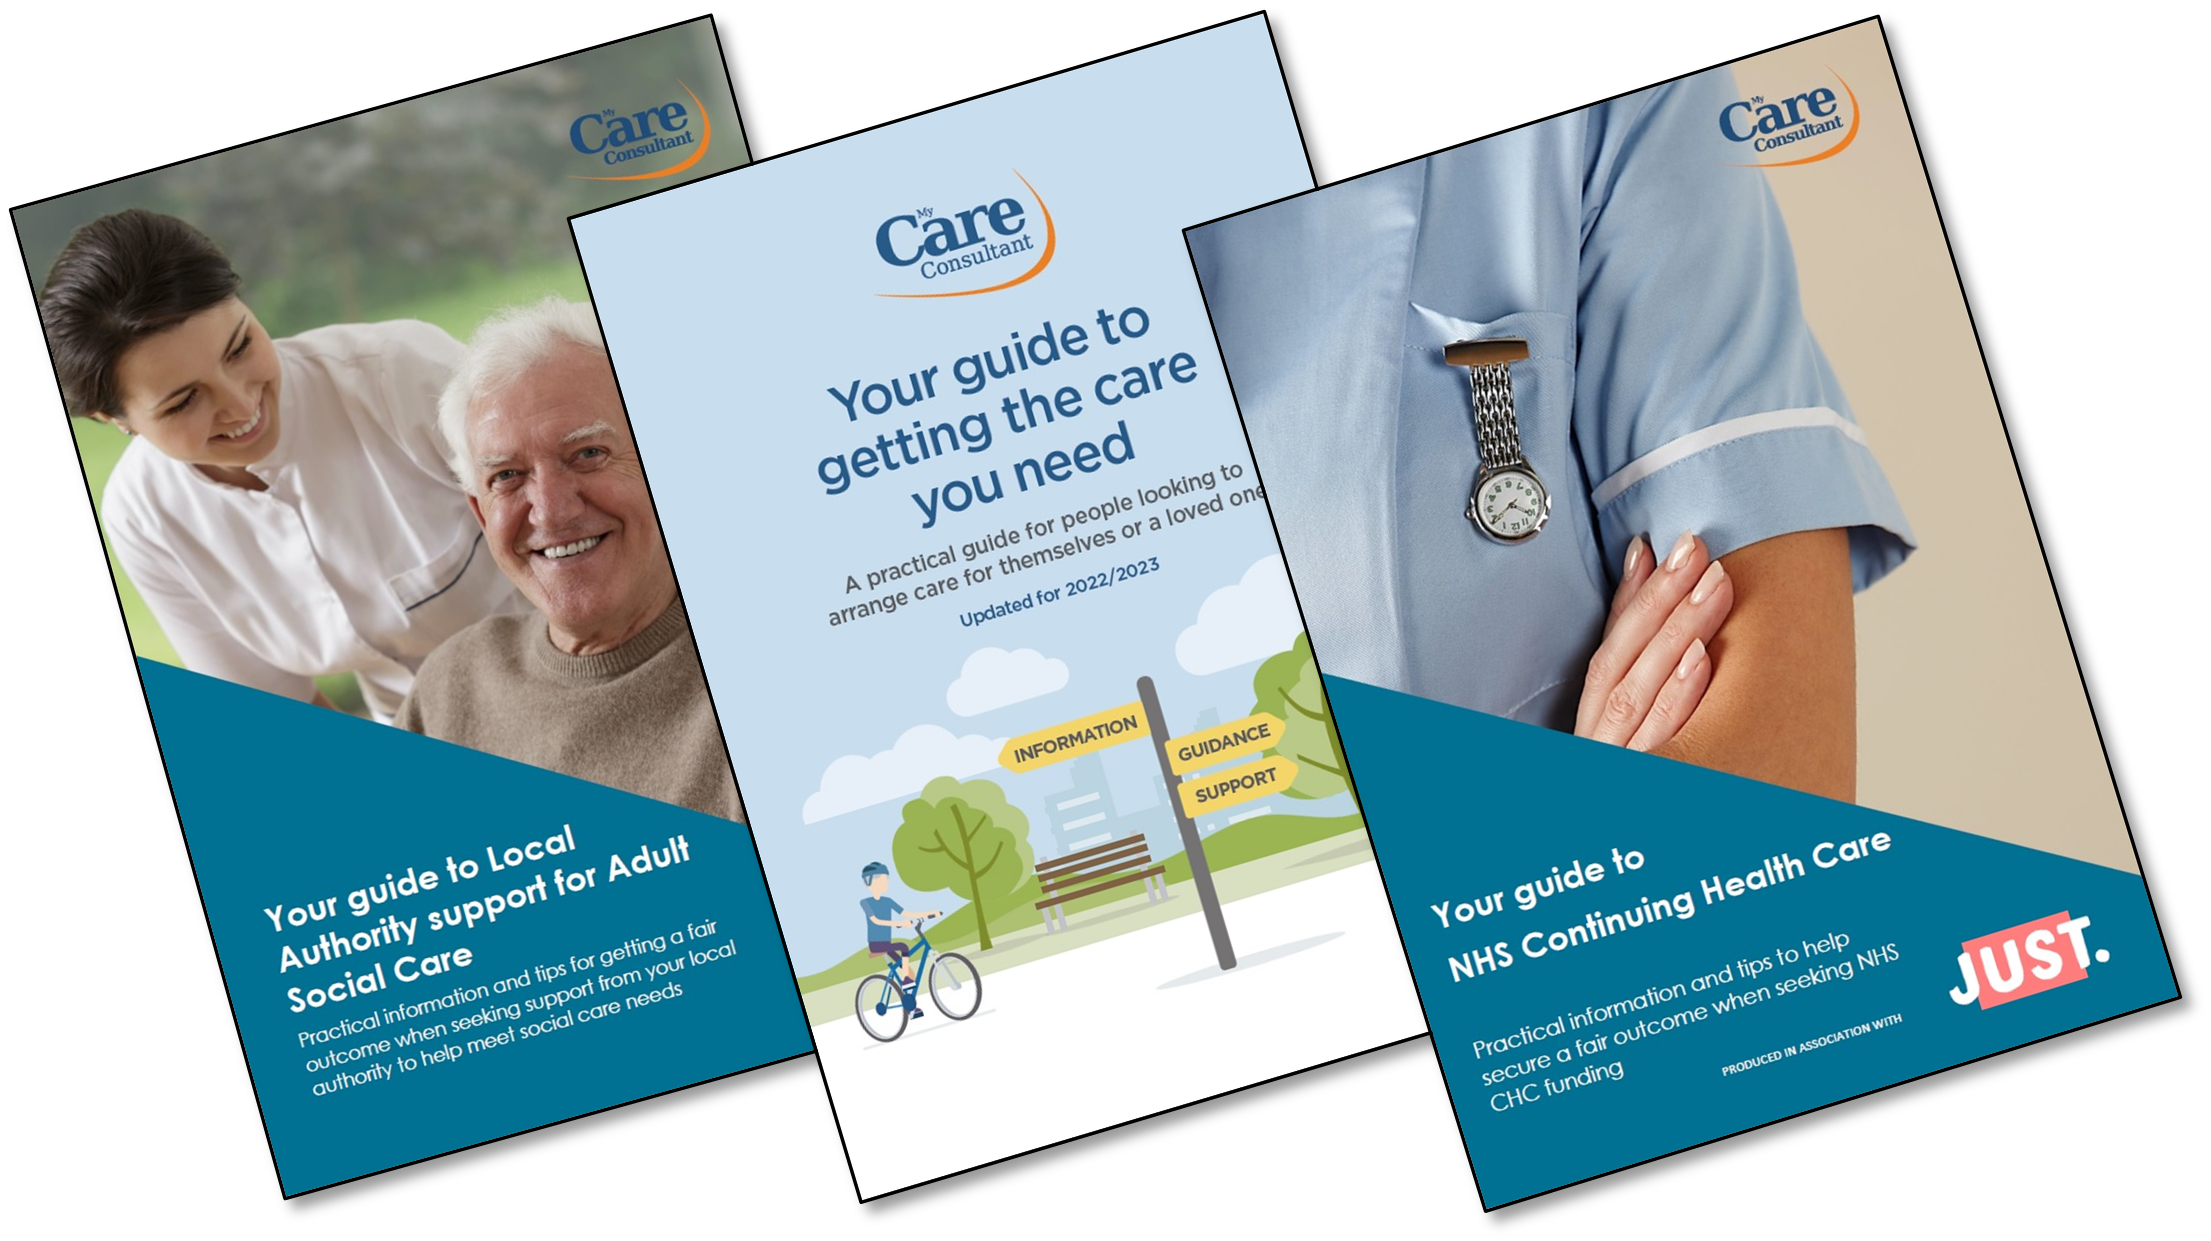 Core Consumer-facing care bundle